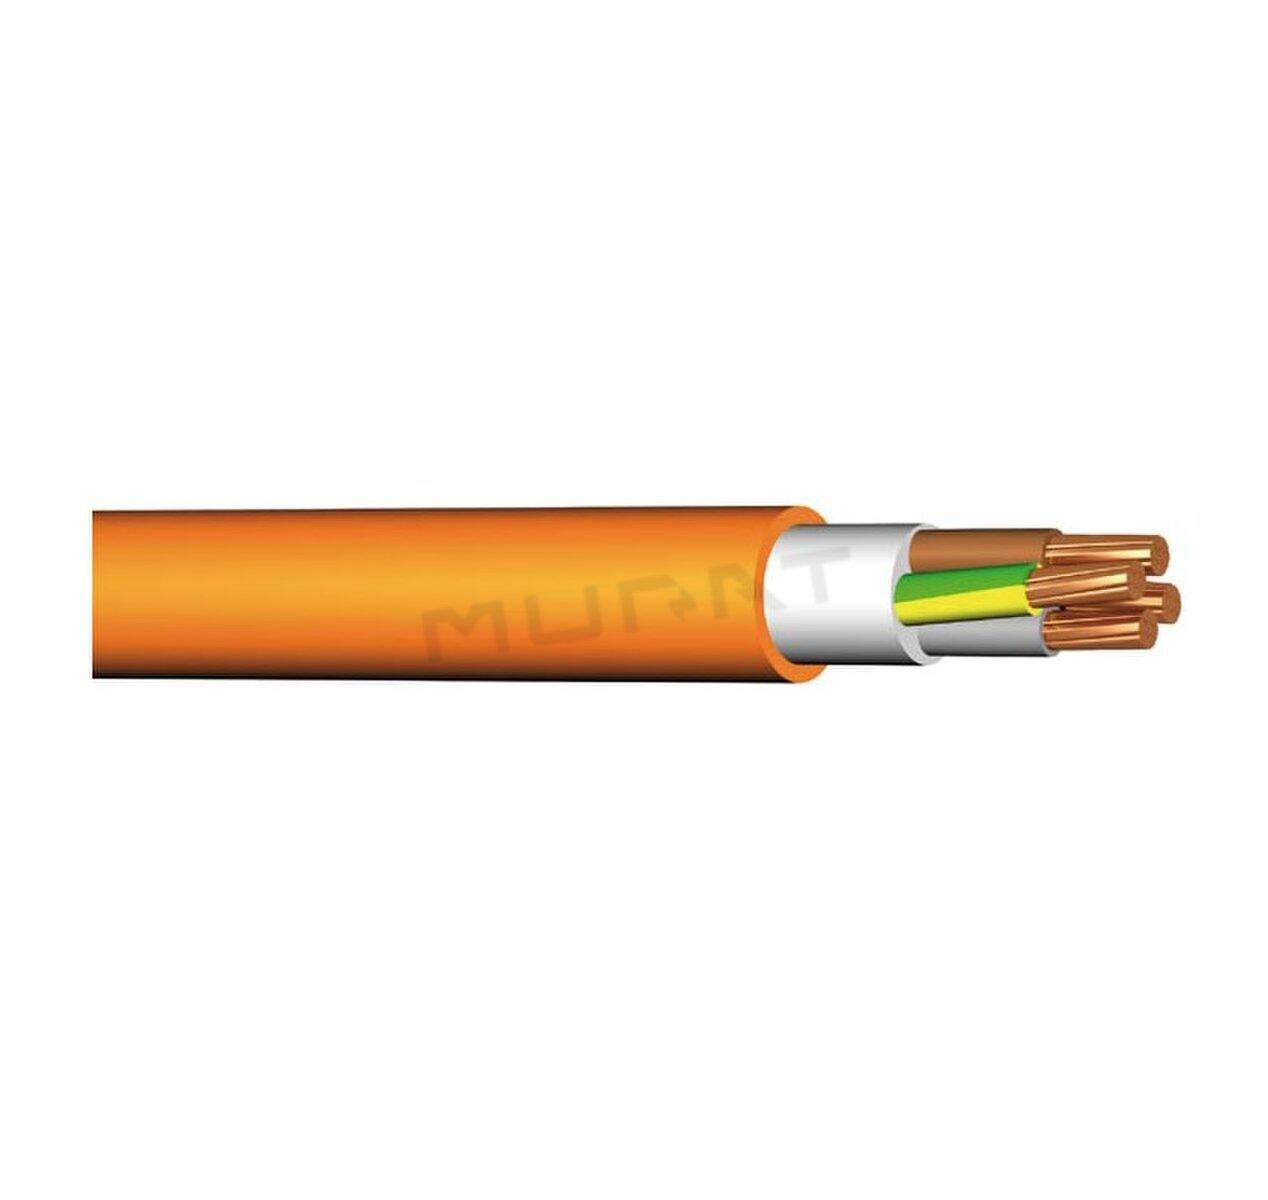 Kábel PRAFlaSafe X-J 5x1,5 mm2 RE B2ca s1d1a1